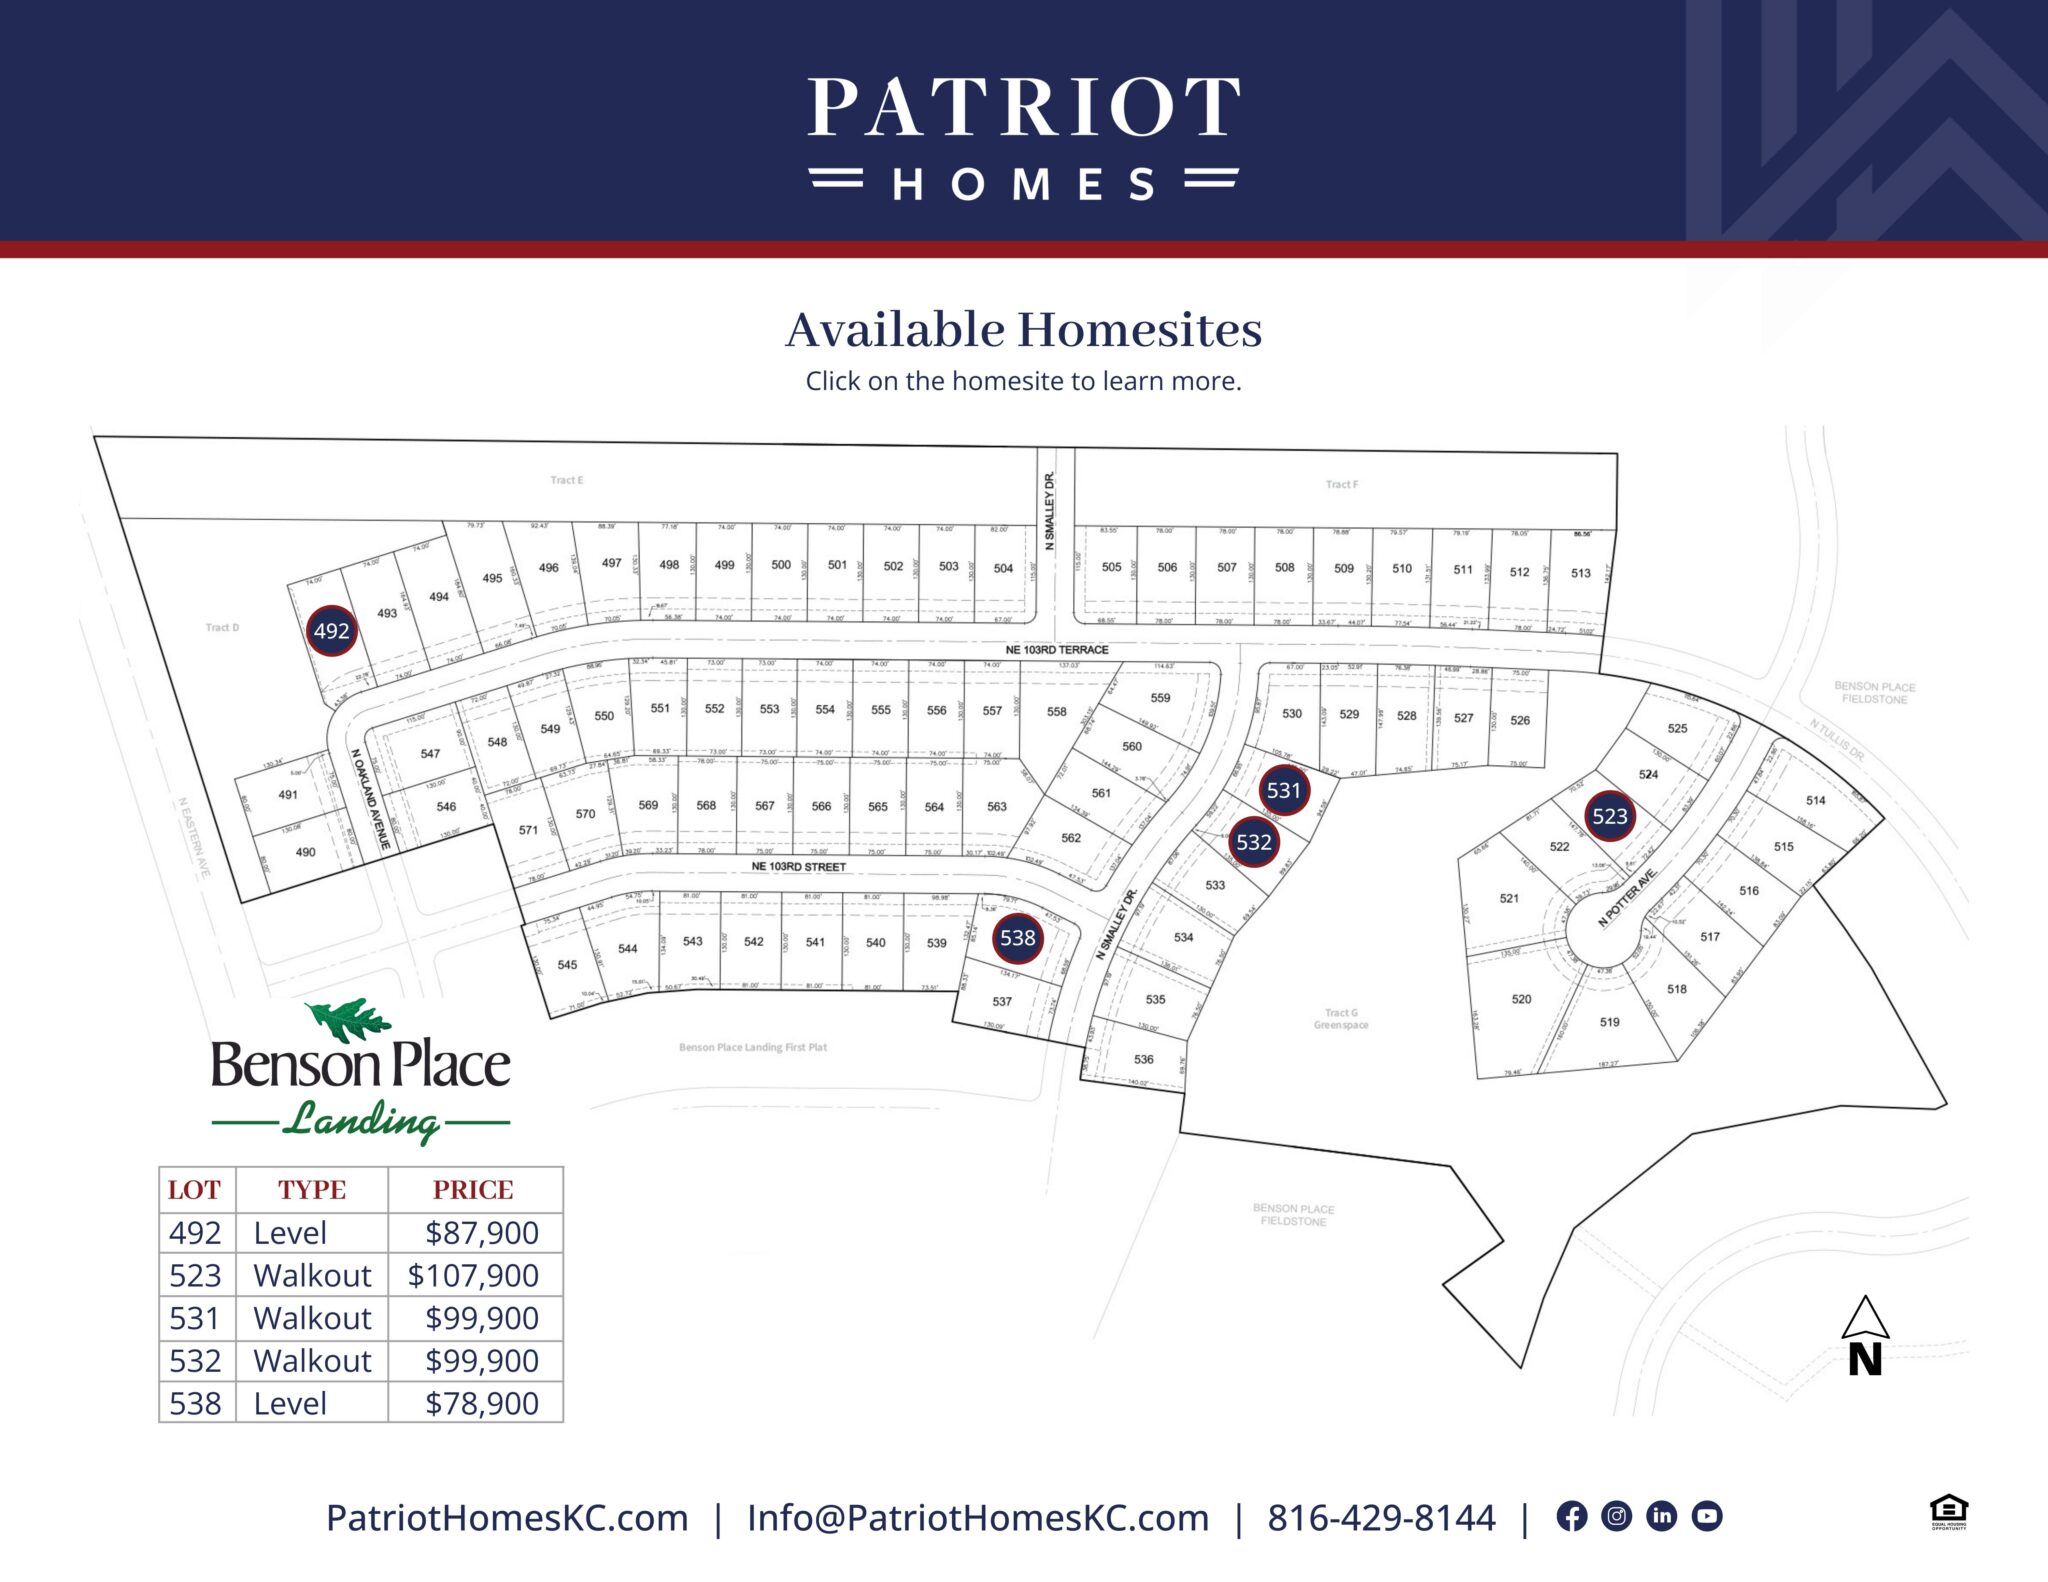 Patriot Homes available homesites lots Benson Place Landing custom build job